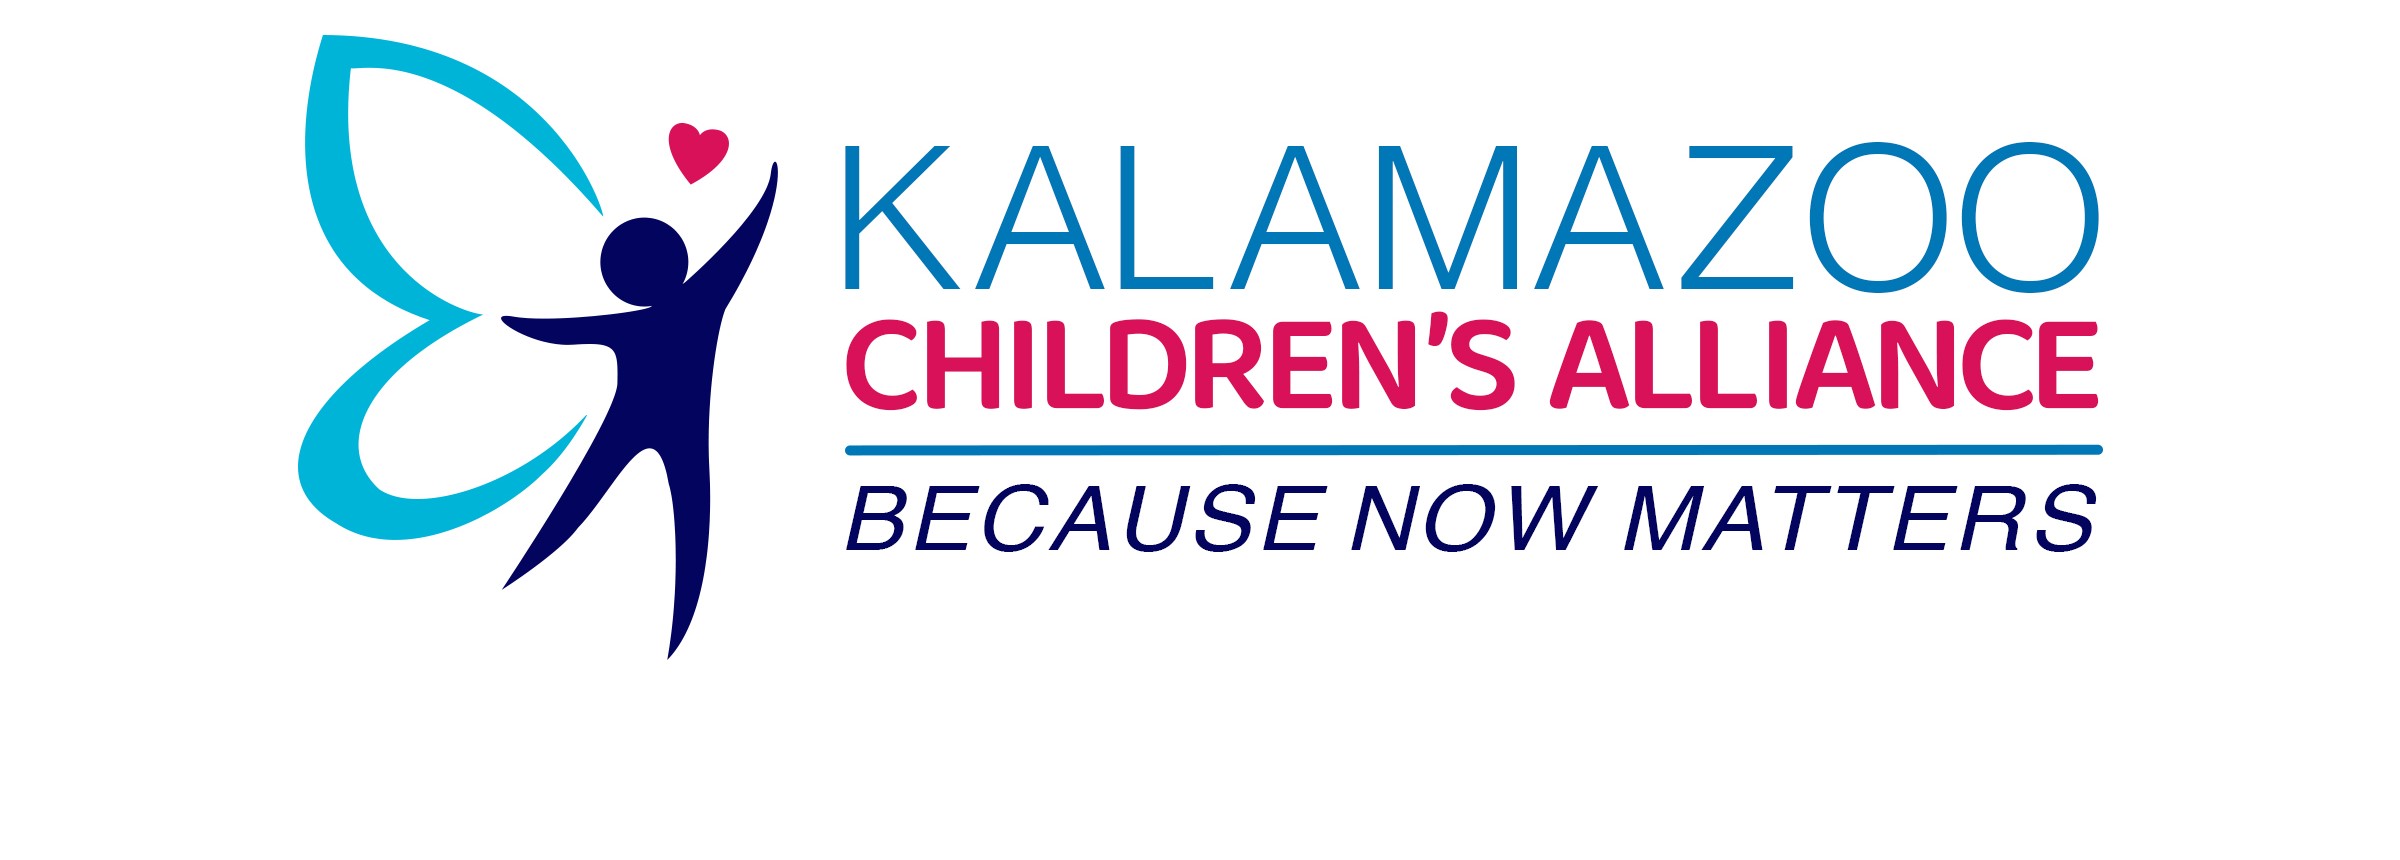 Childrens Alliance Kalamazoo